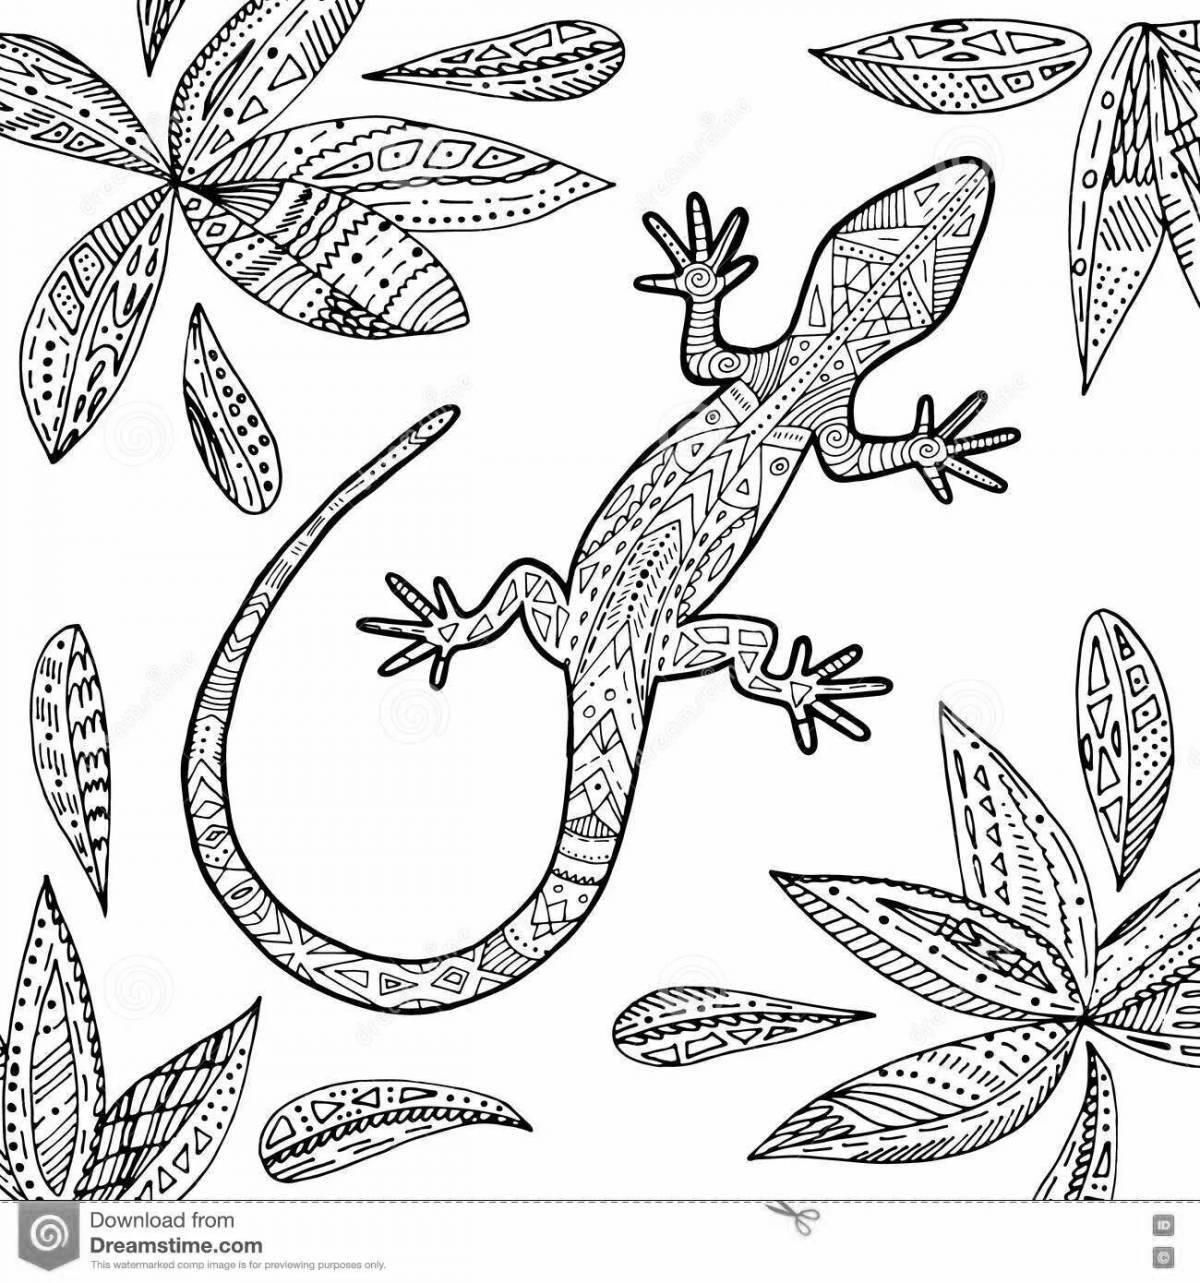 Incredible anti-stress lizard coloring book